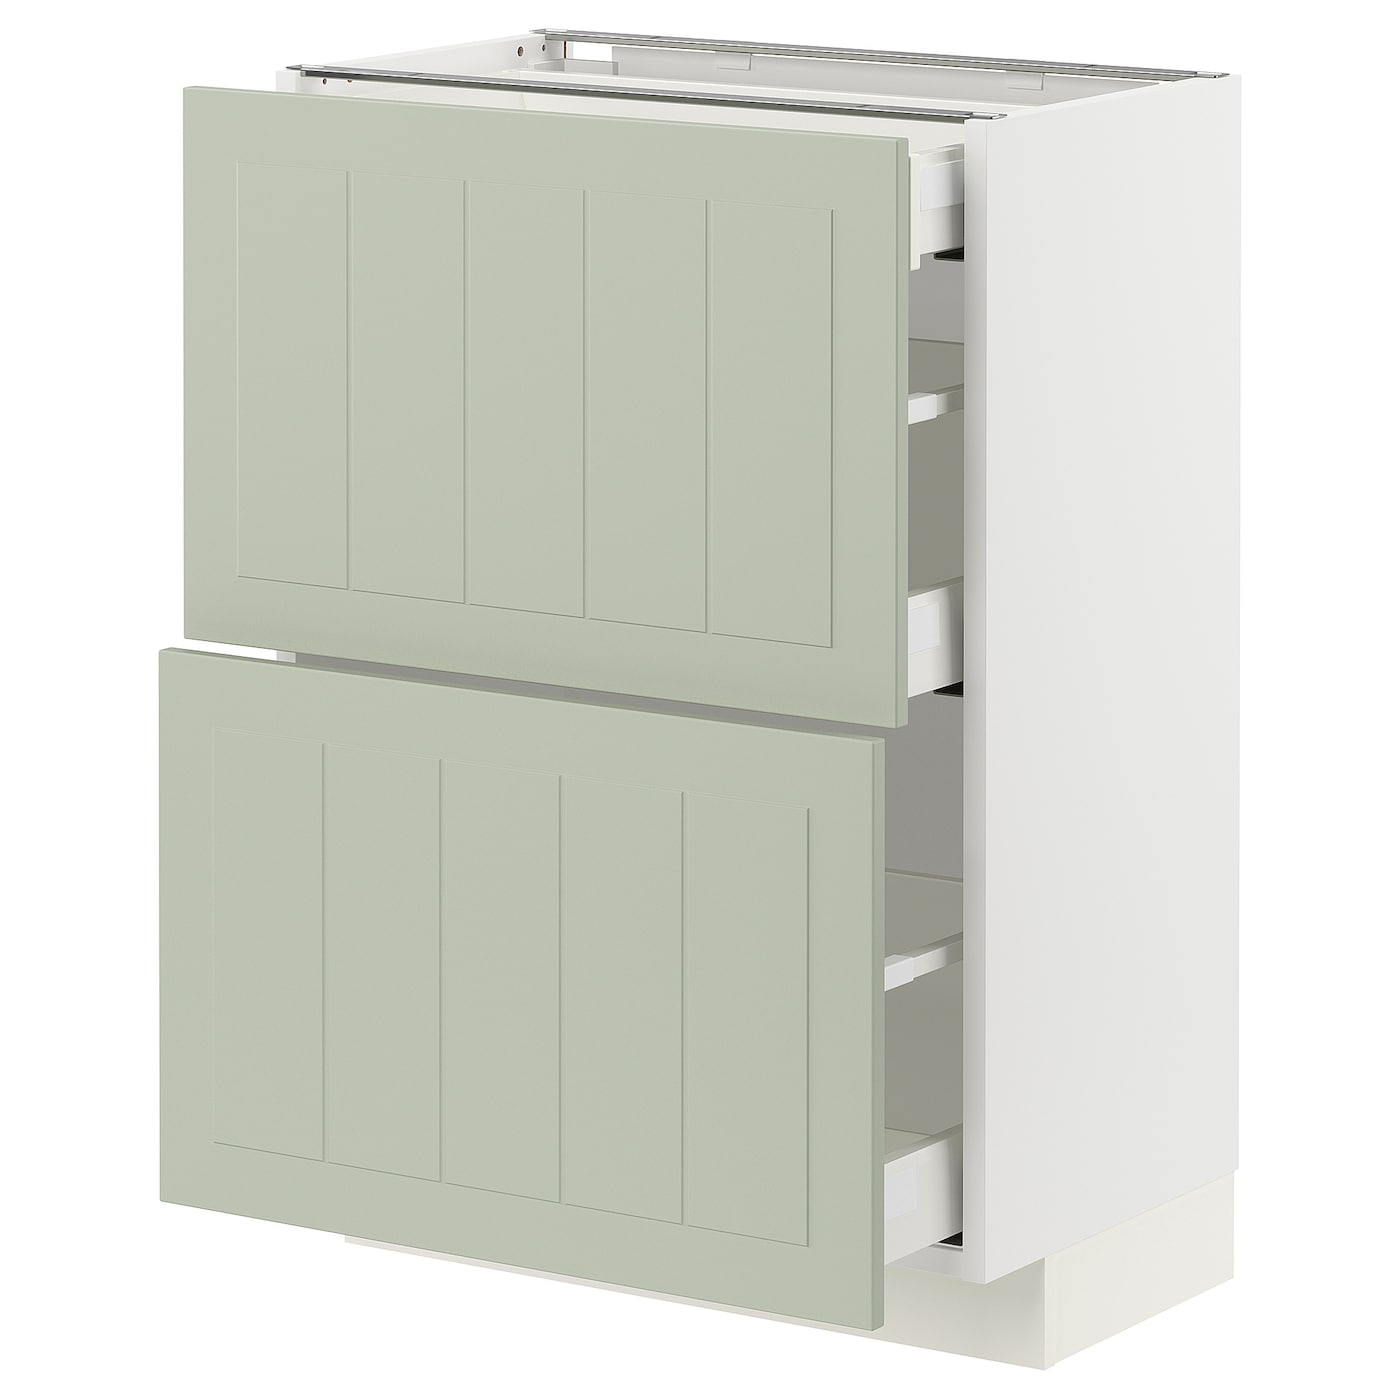 Нижний шкаф - METOD / MAXIMERA IKEA/ МЕТОД / МАКСИМЕРА ИКЕА, 88х60 см, белый/зеленый